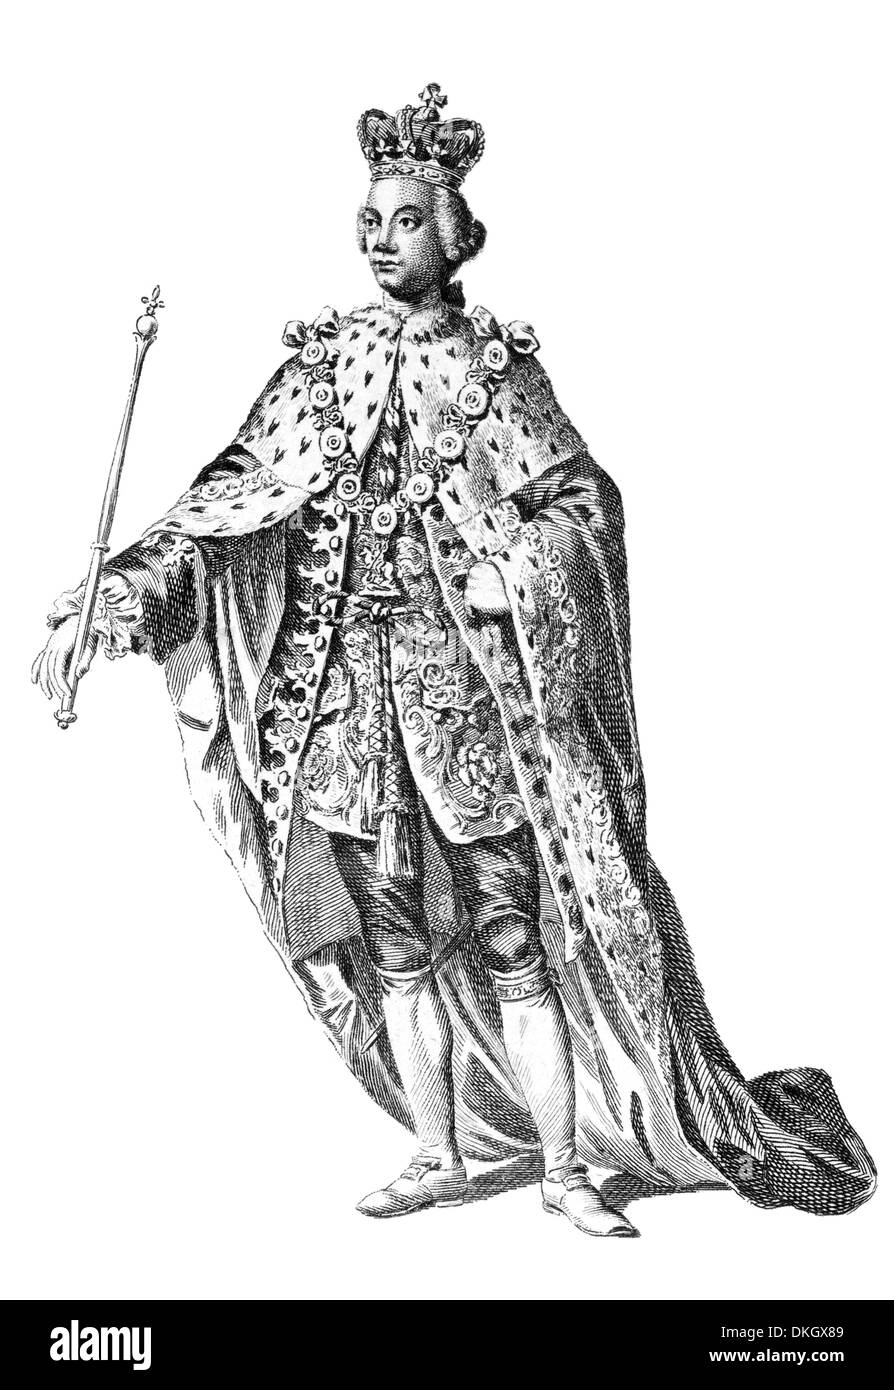 Le roi George III de Grande-Bretagne Banque D'Images